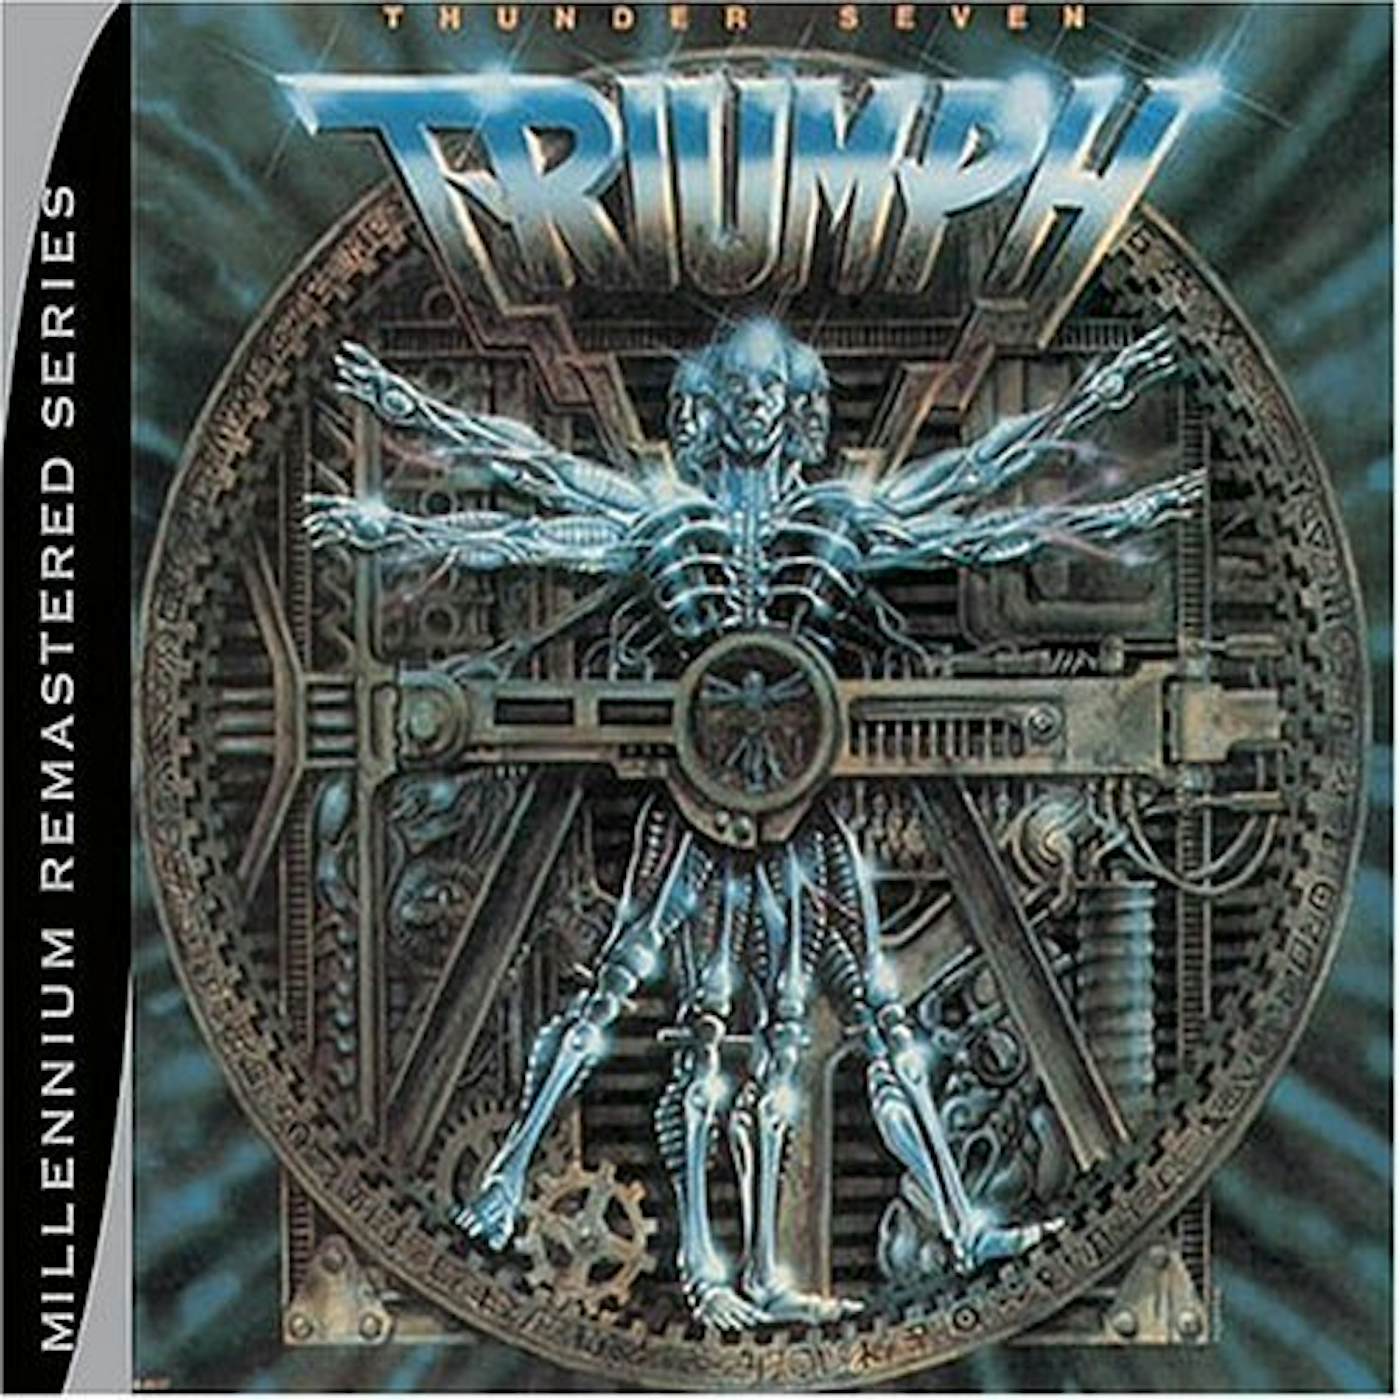 Triumph THUNDER SEVEN CD